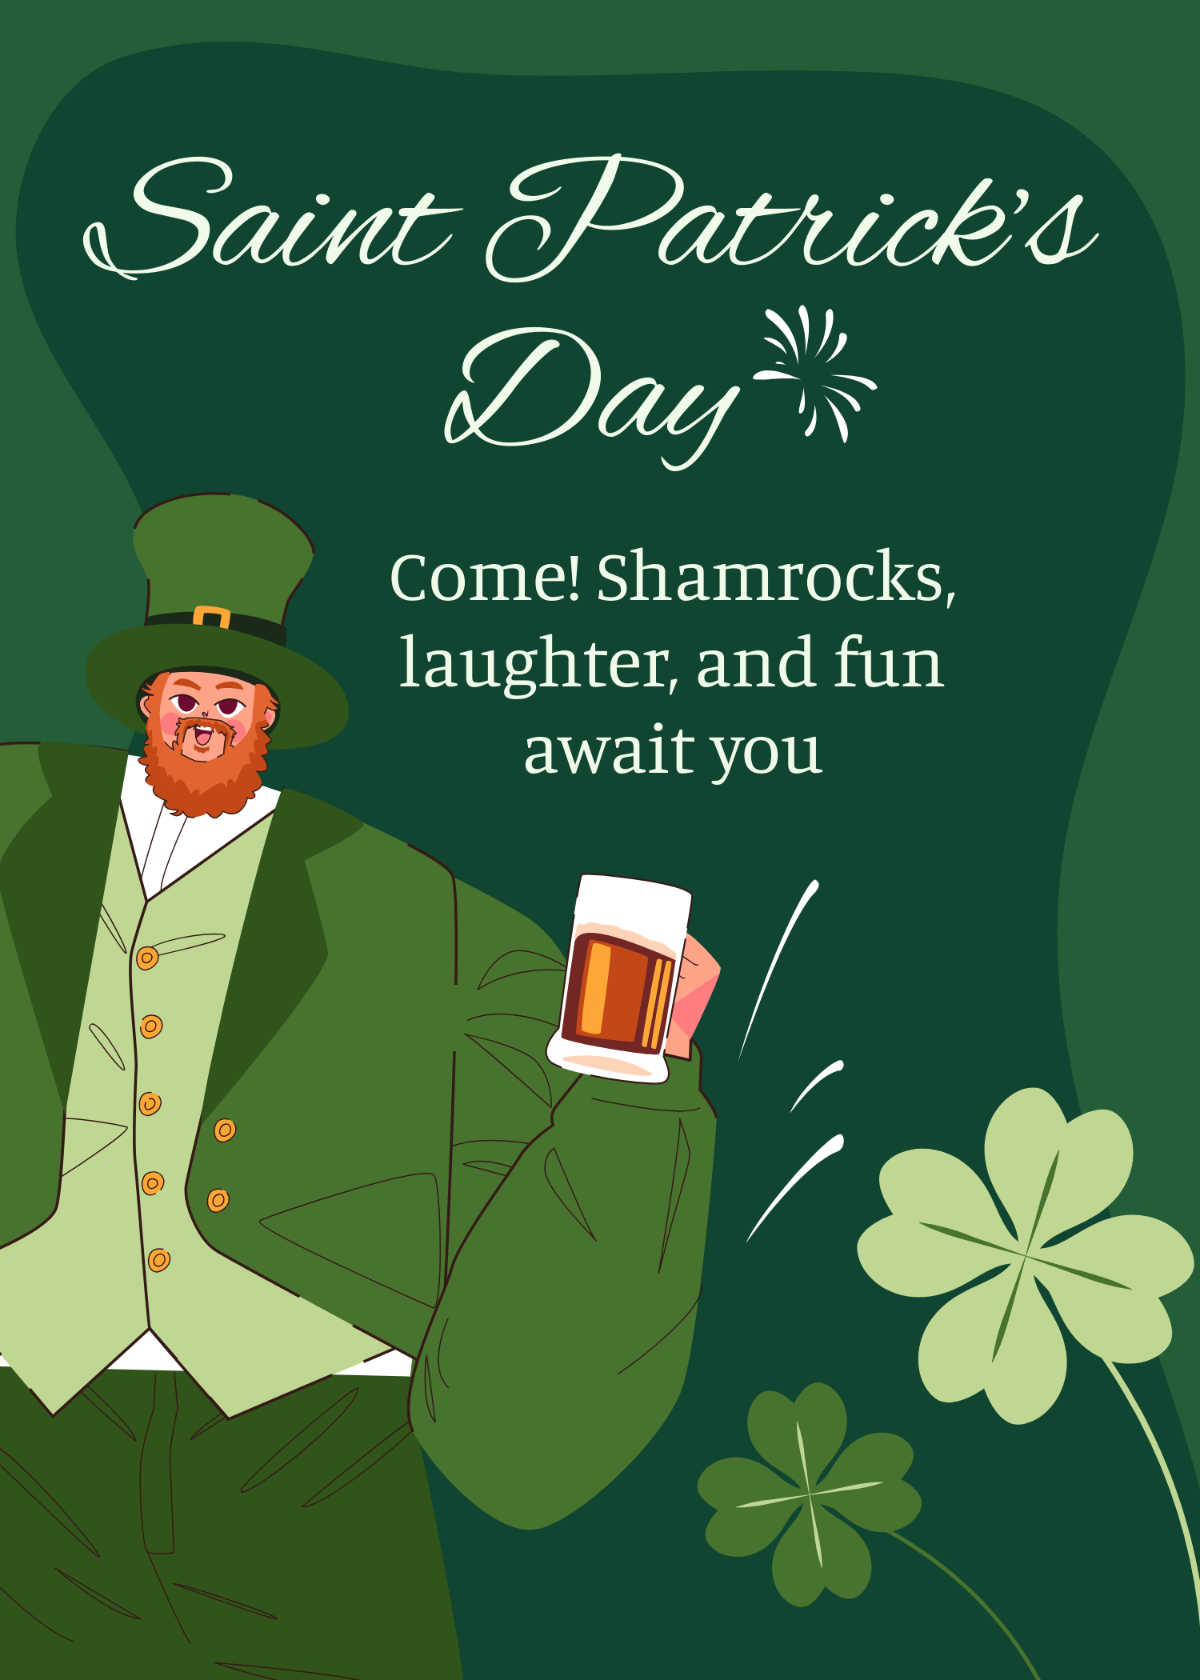  Saint Patricks Day Invitation Card Template